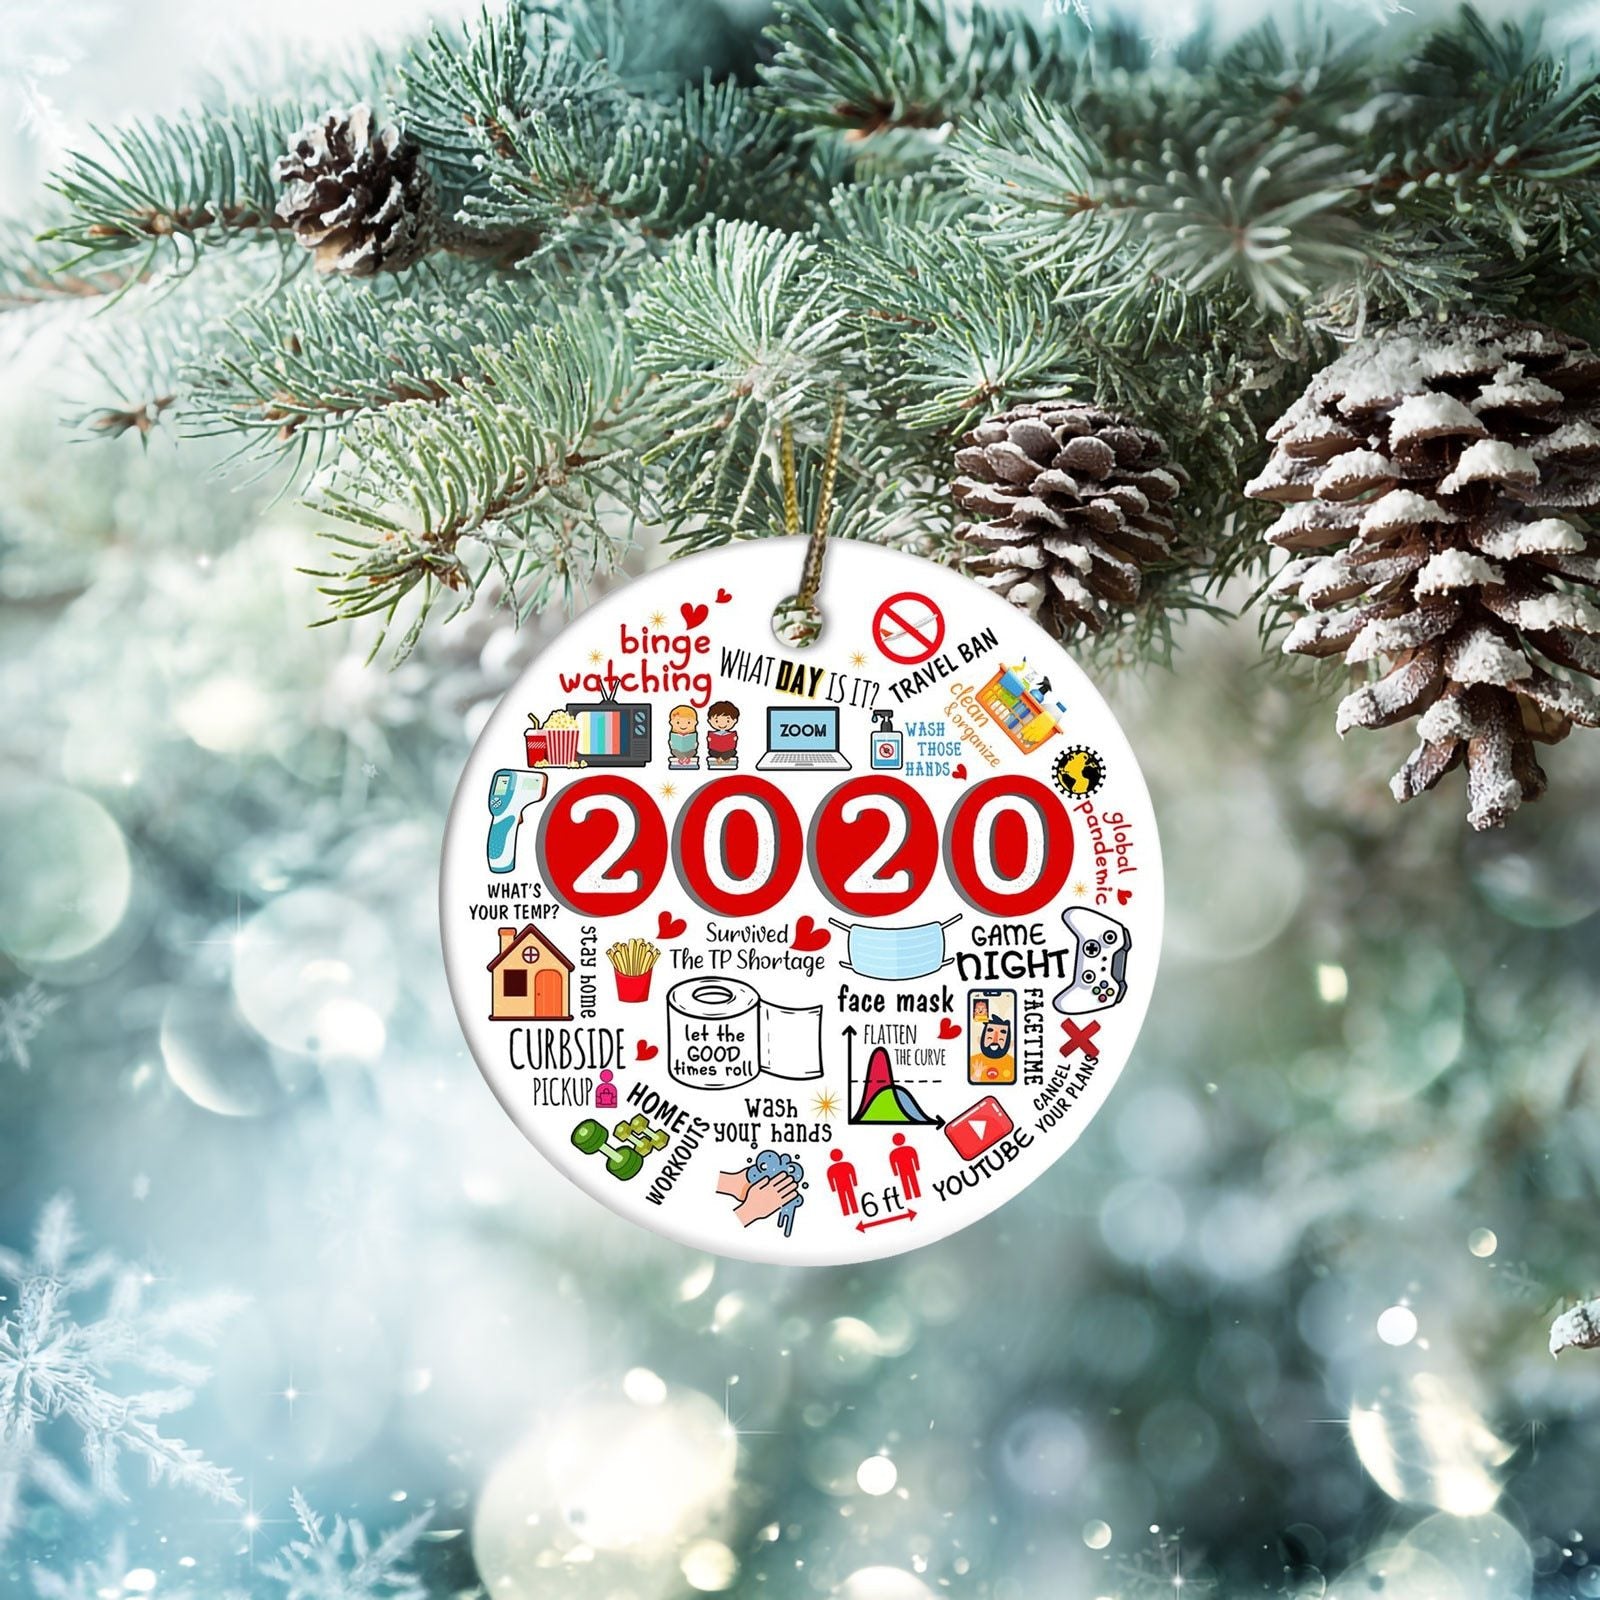 🎄2020 Annual Events Christmas Ornament🎄 - MakenShop